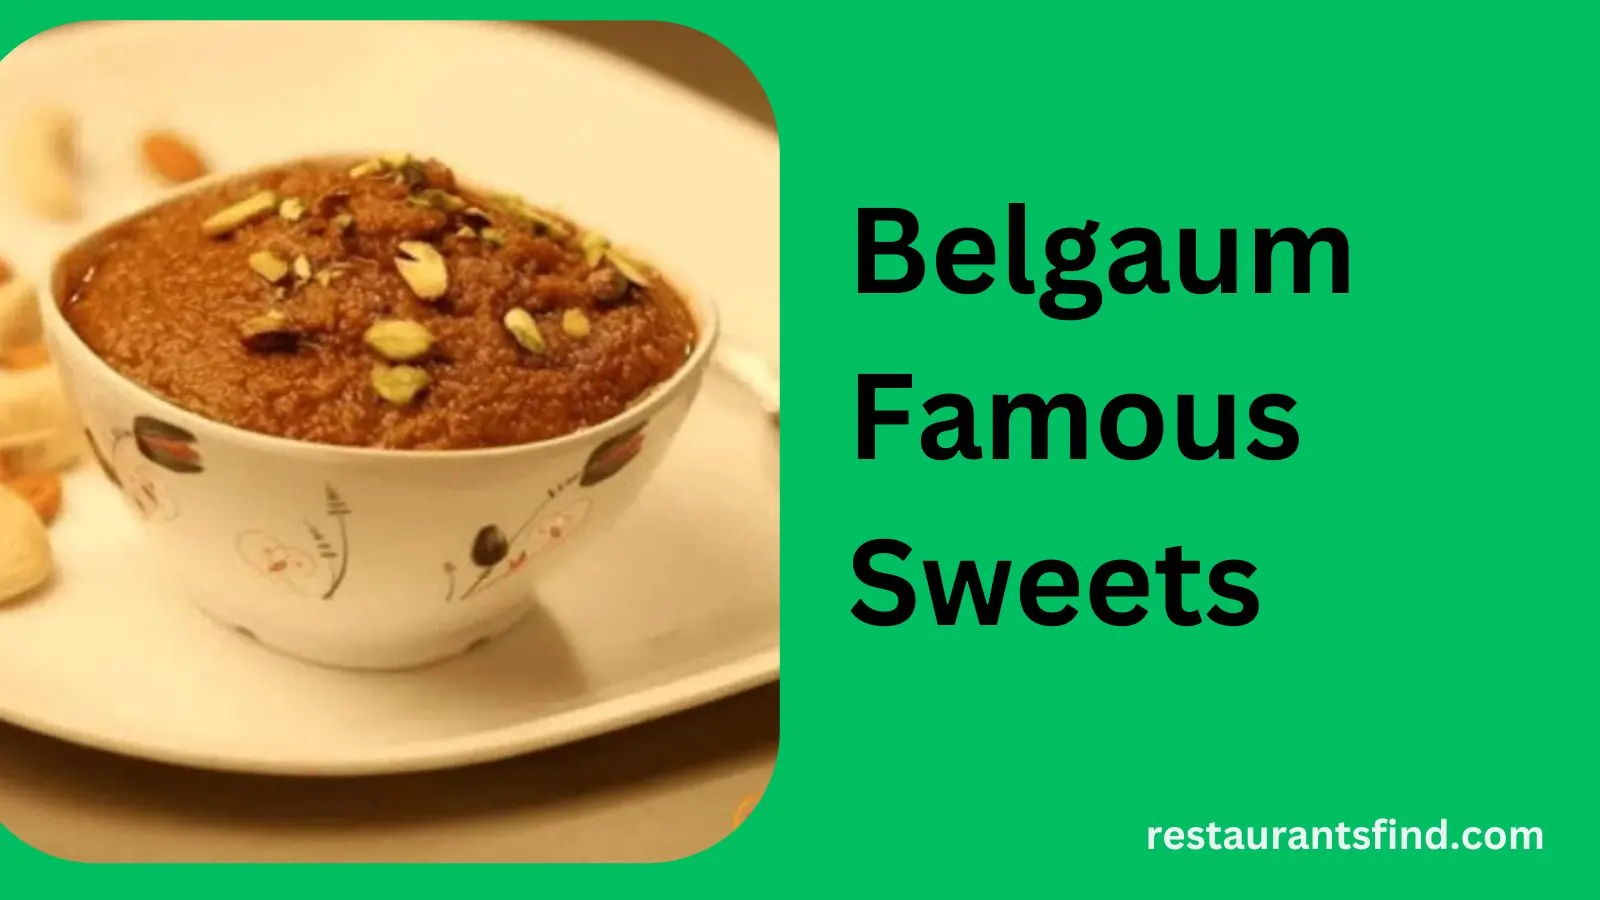 Must try 10 Best Belgaum Famous Sweets